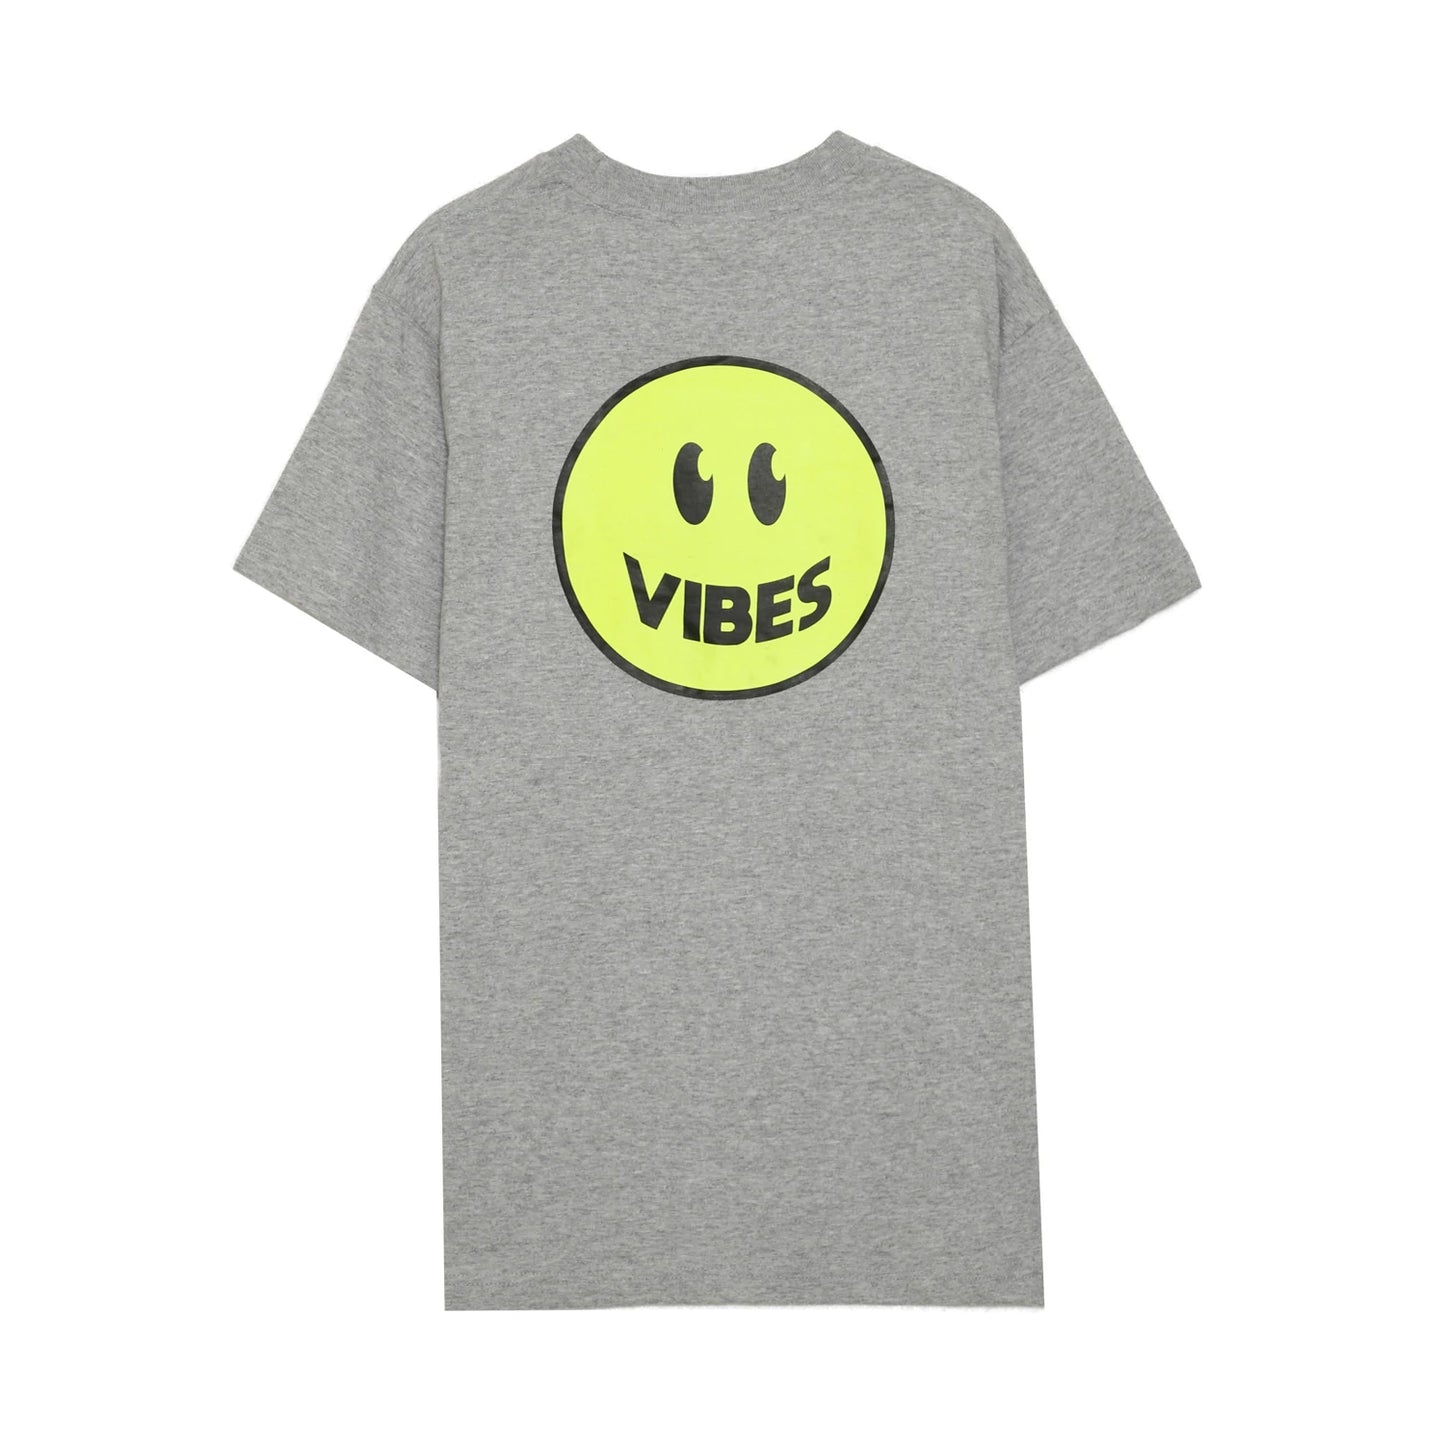 Aly Good Vibes - Good Vibes T-Shirt (Grey)